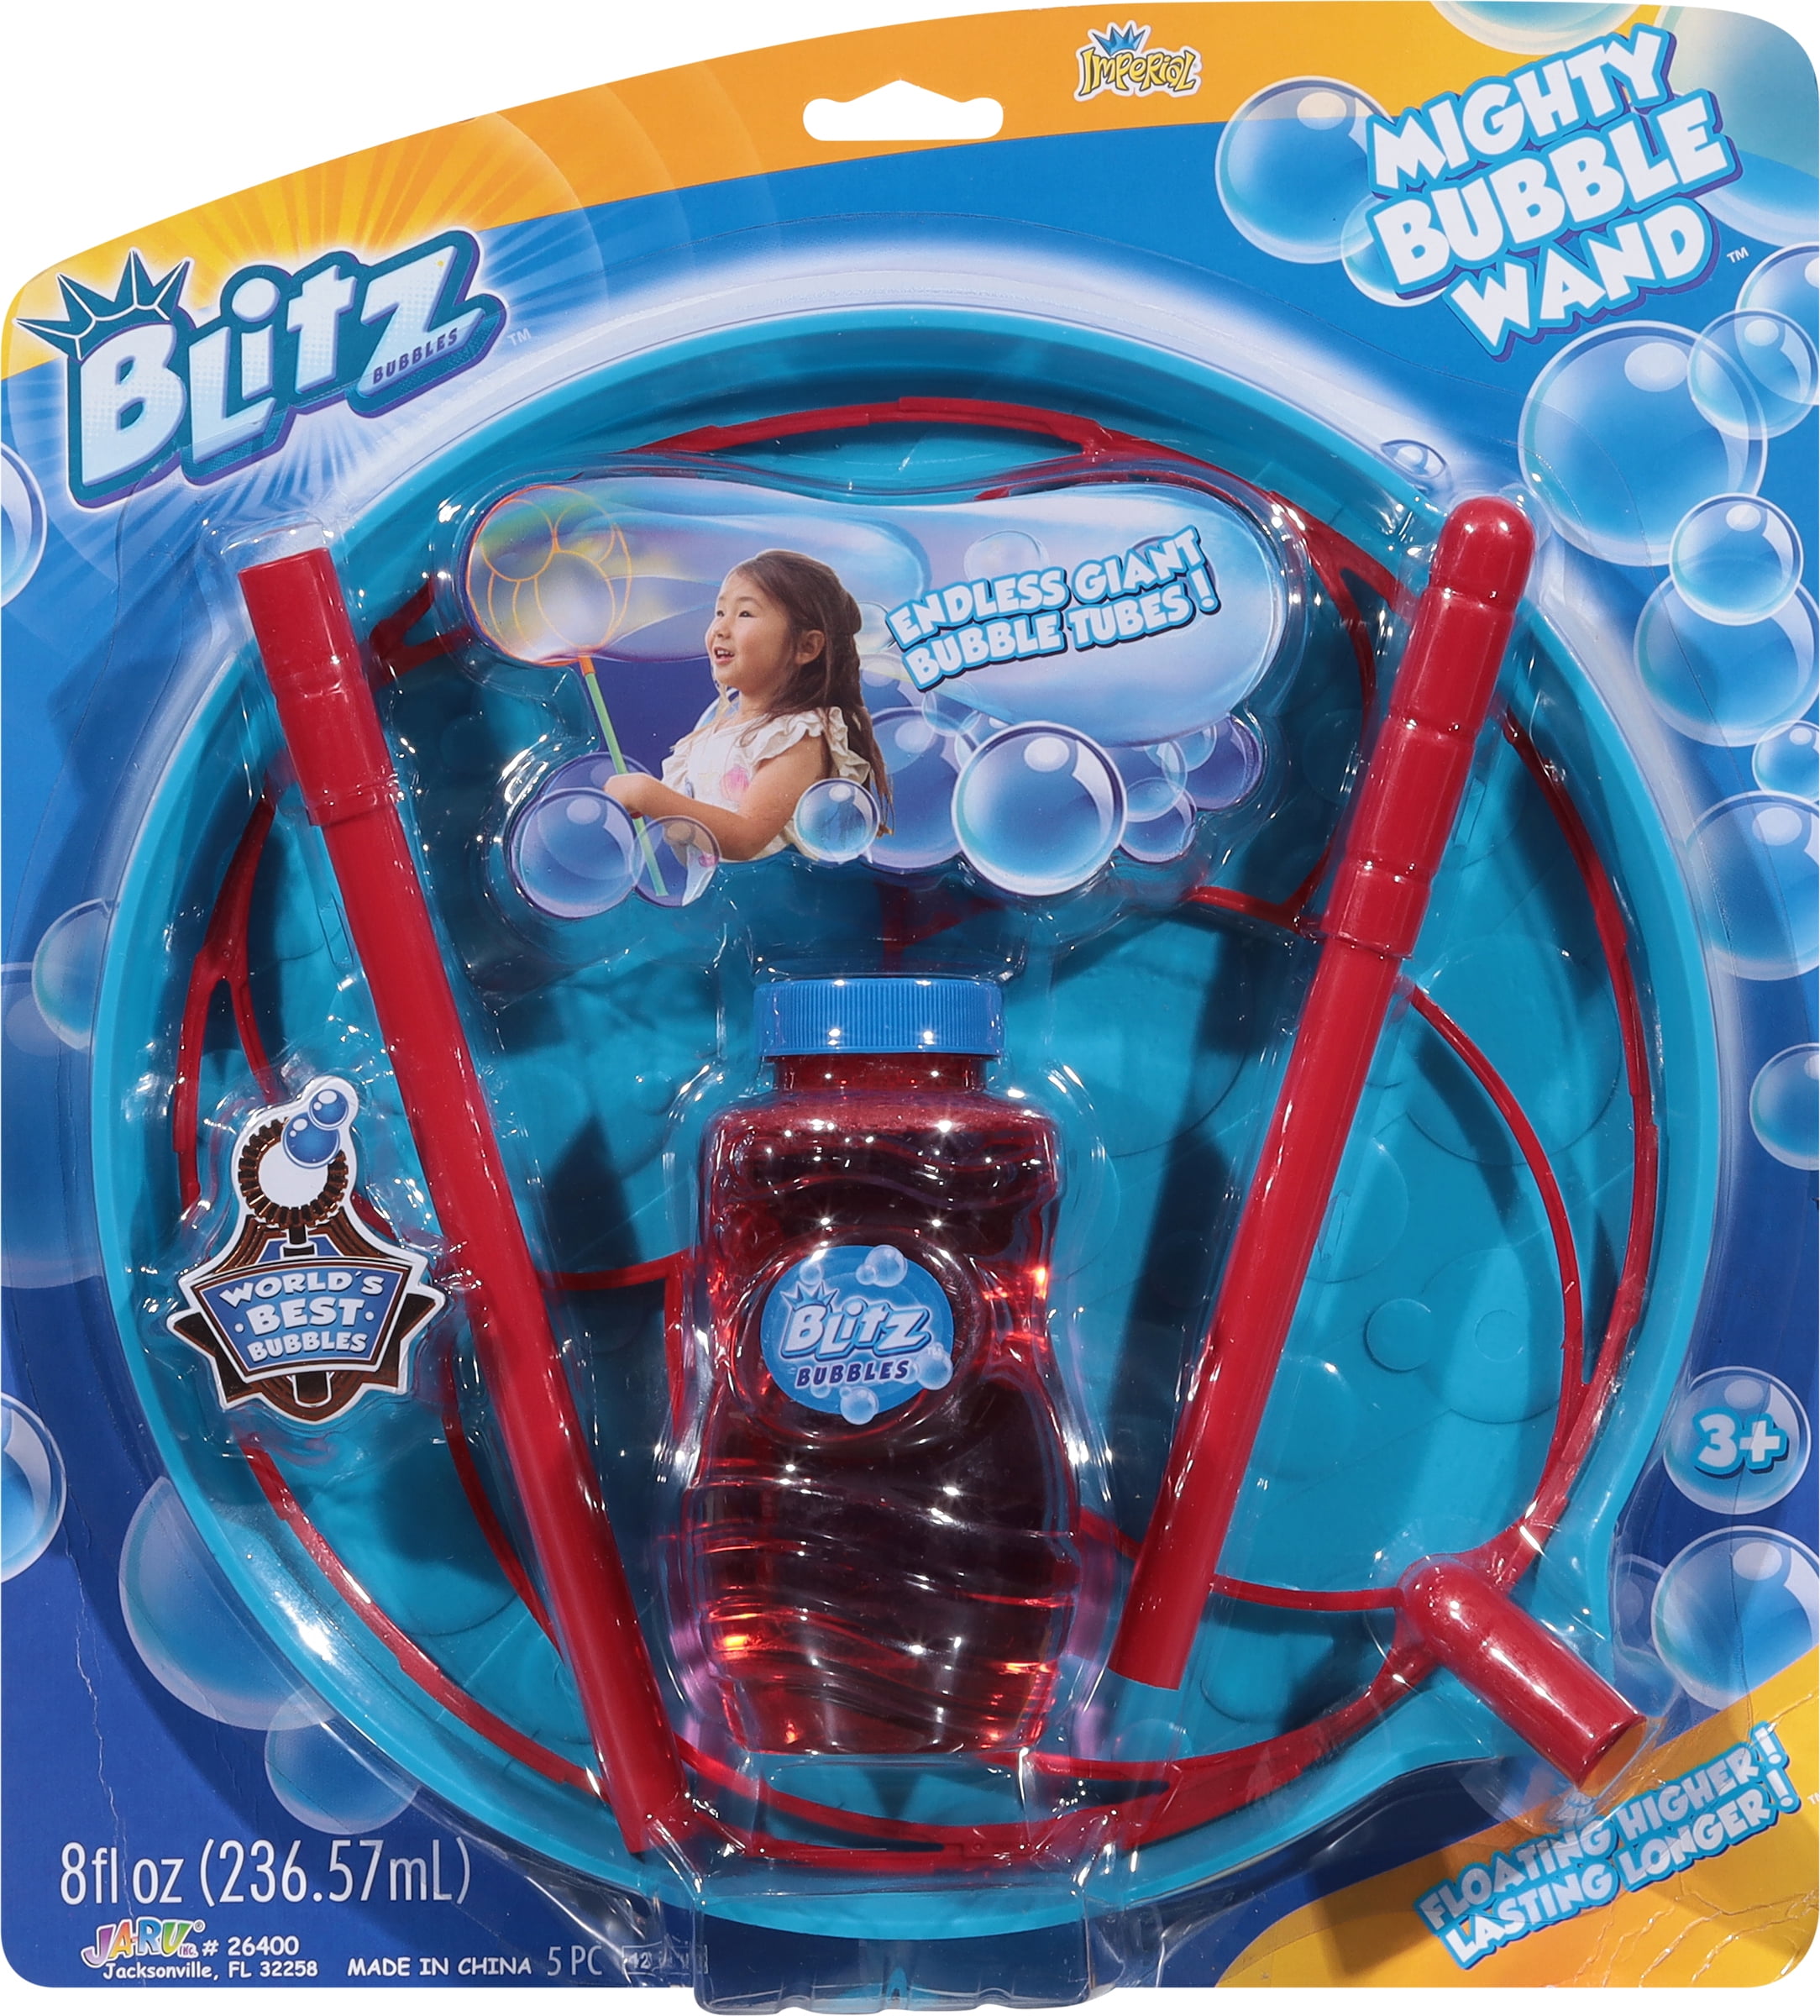 Ja-ru Super Miracle Bubbles 6 Pk., 4 Oz. Each, Yard Games, Baby & Toys